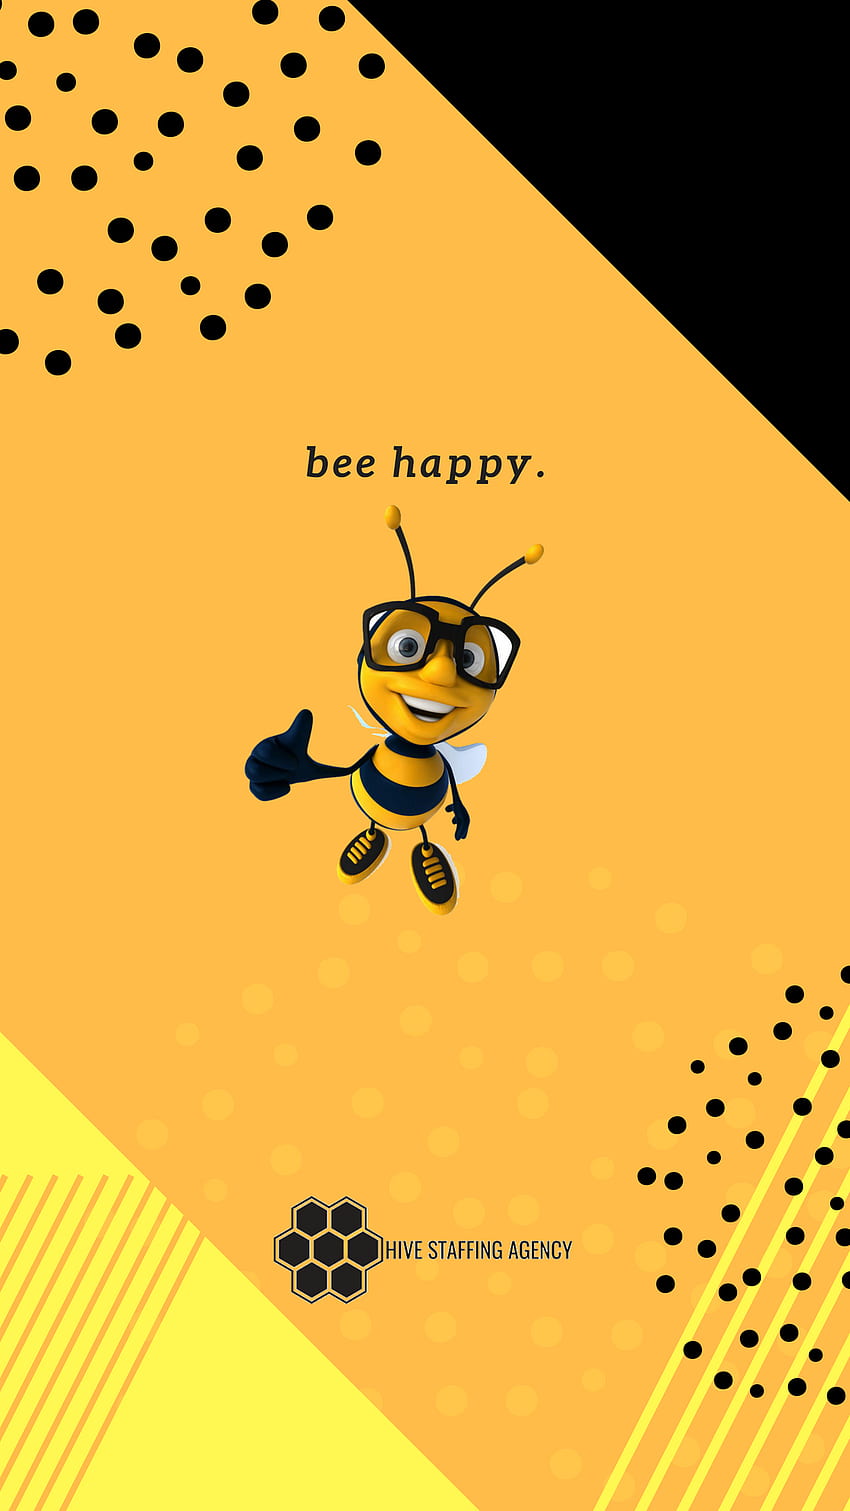 S. Agencja zatrudnienia Hive, Ratuj pszczoły Tapeta na telefon HD